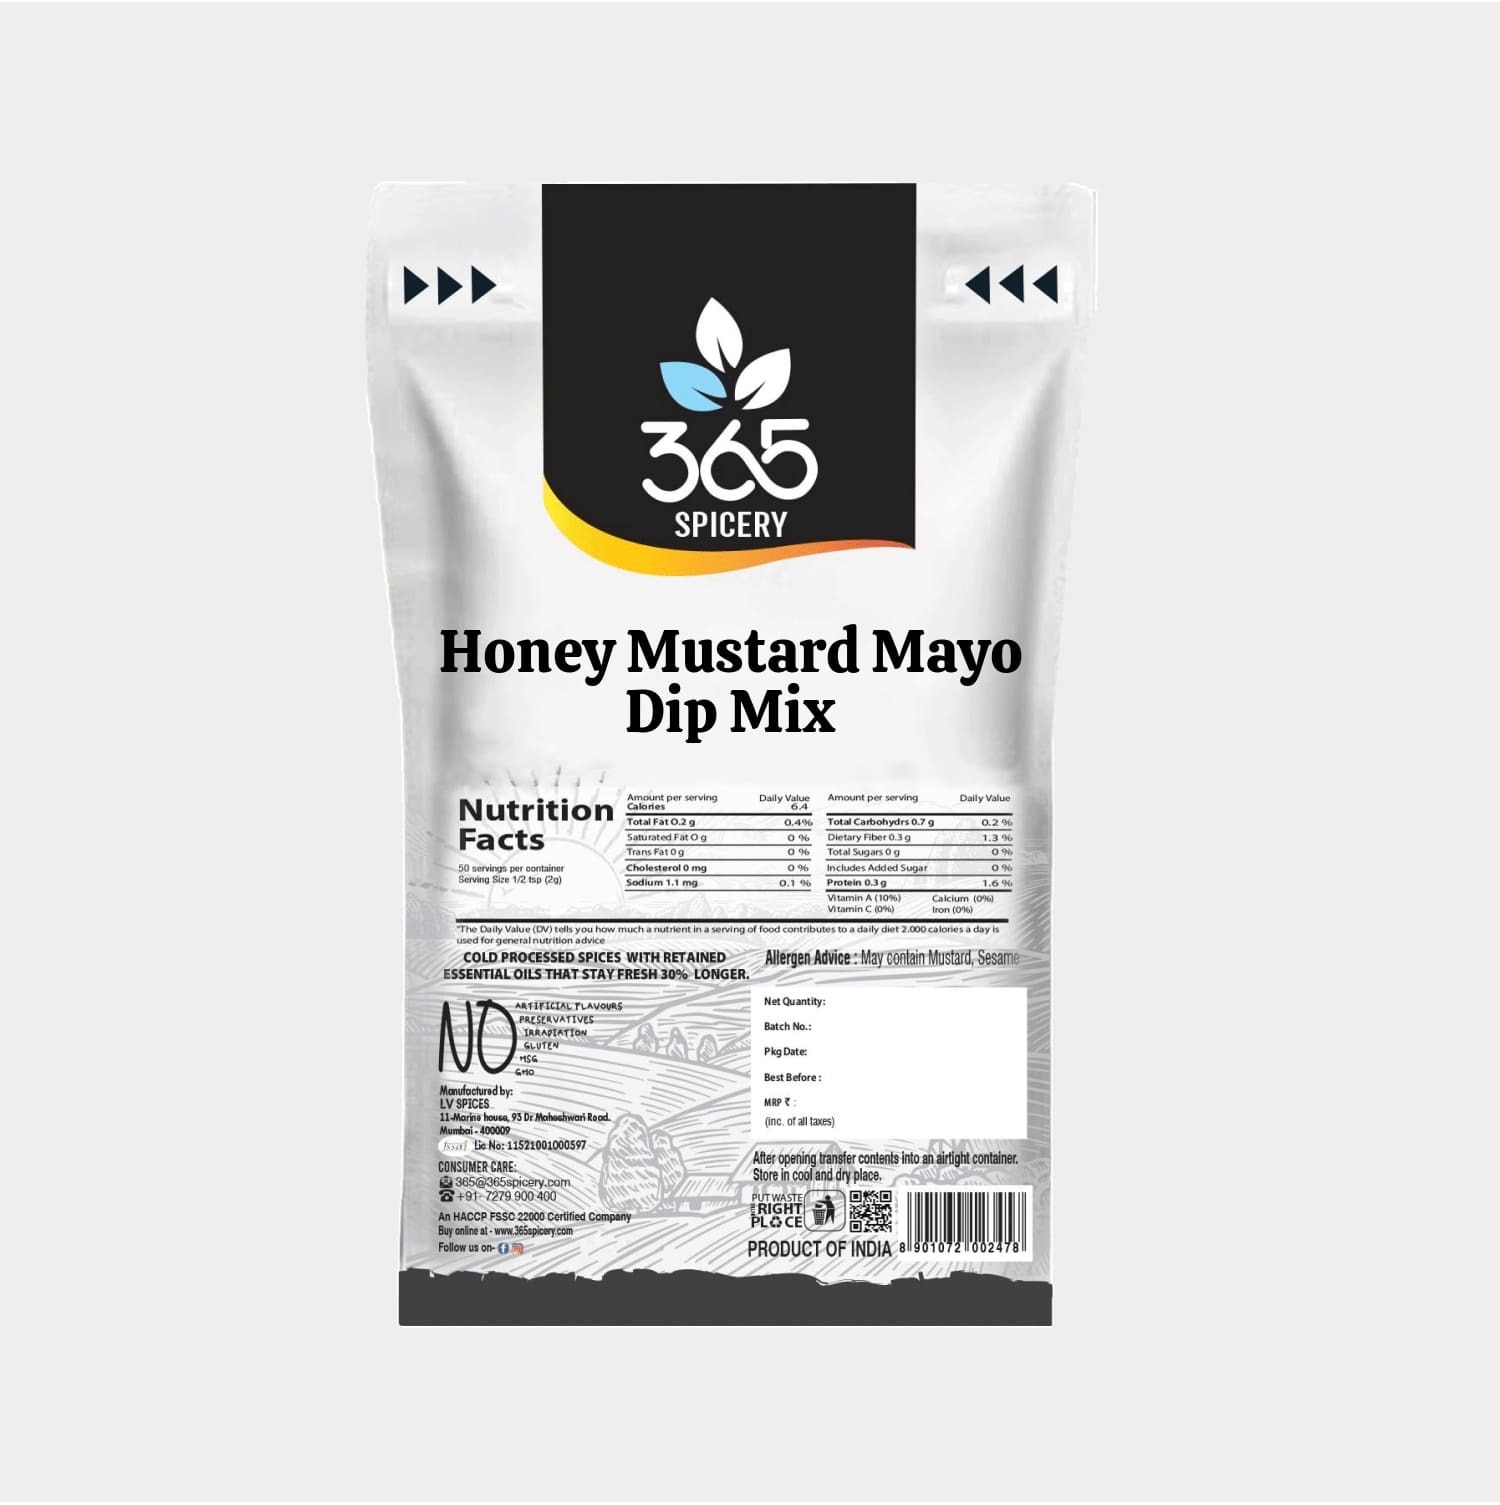 Honey Mustard Mayo Dip Mix